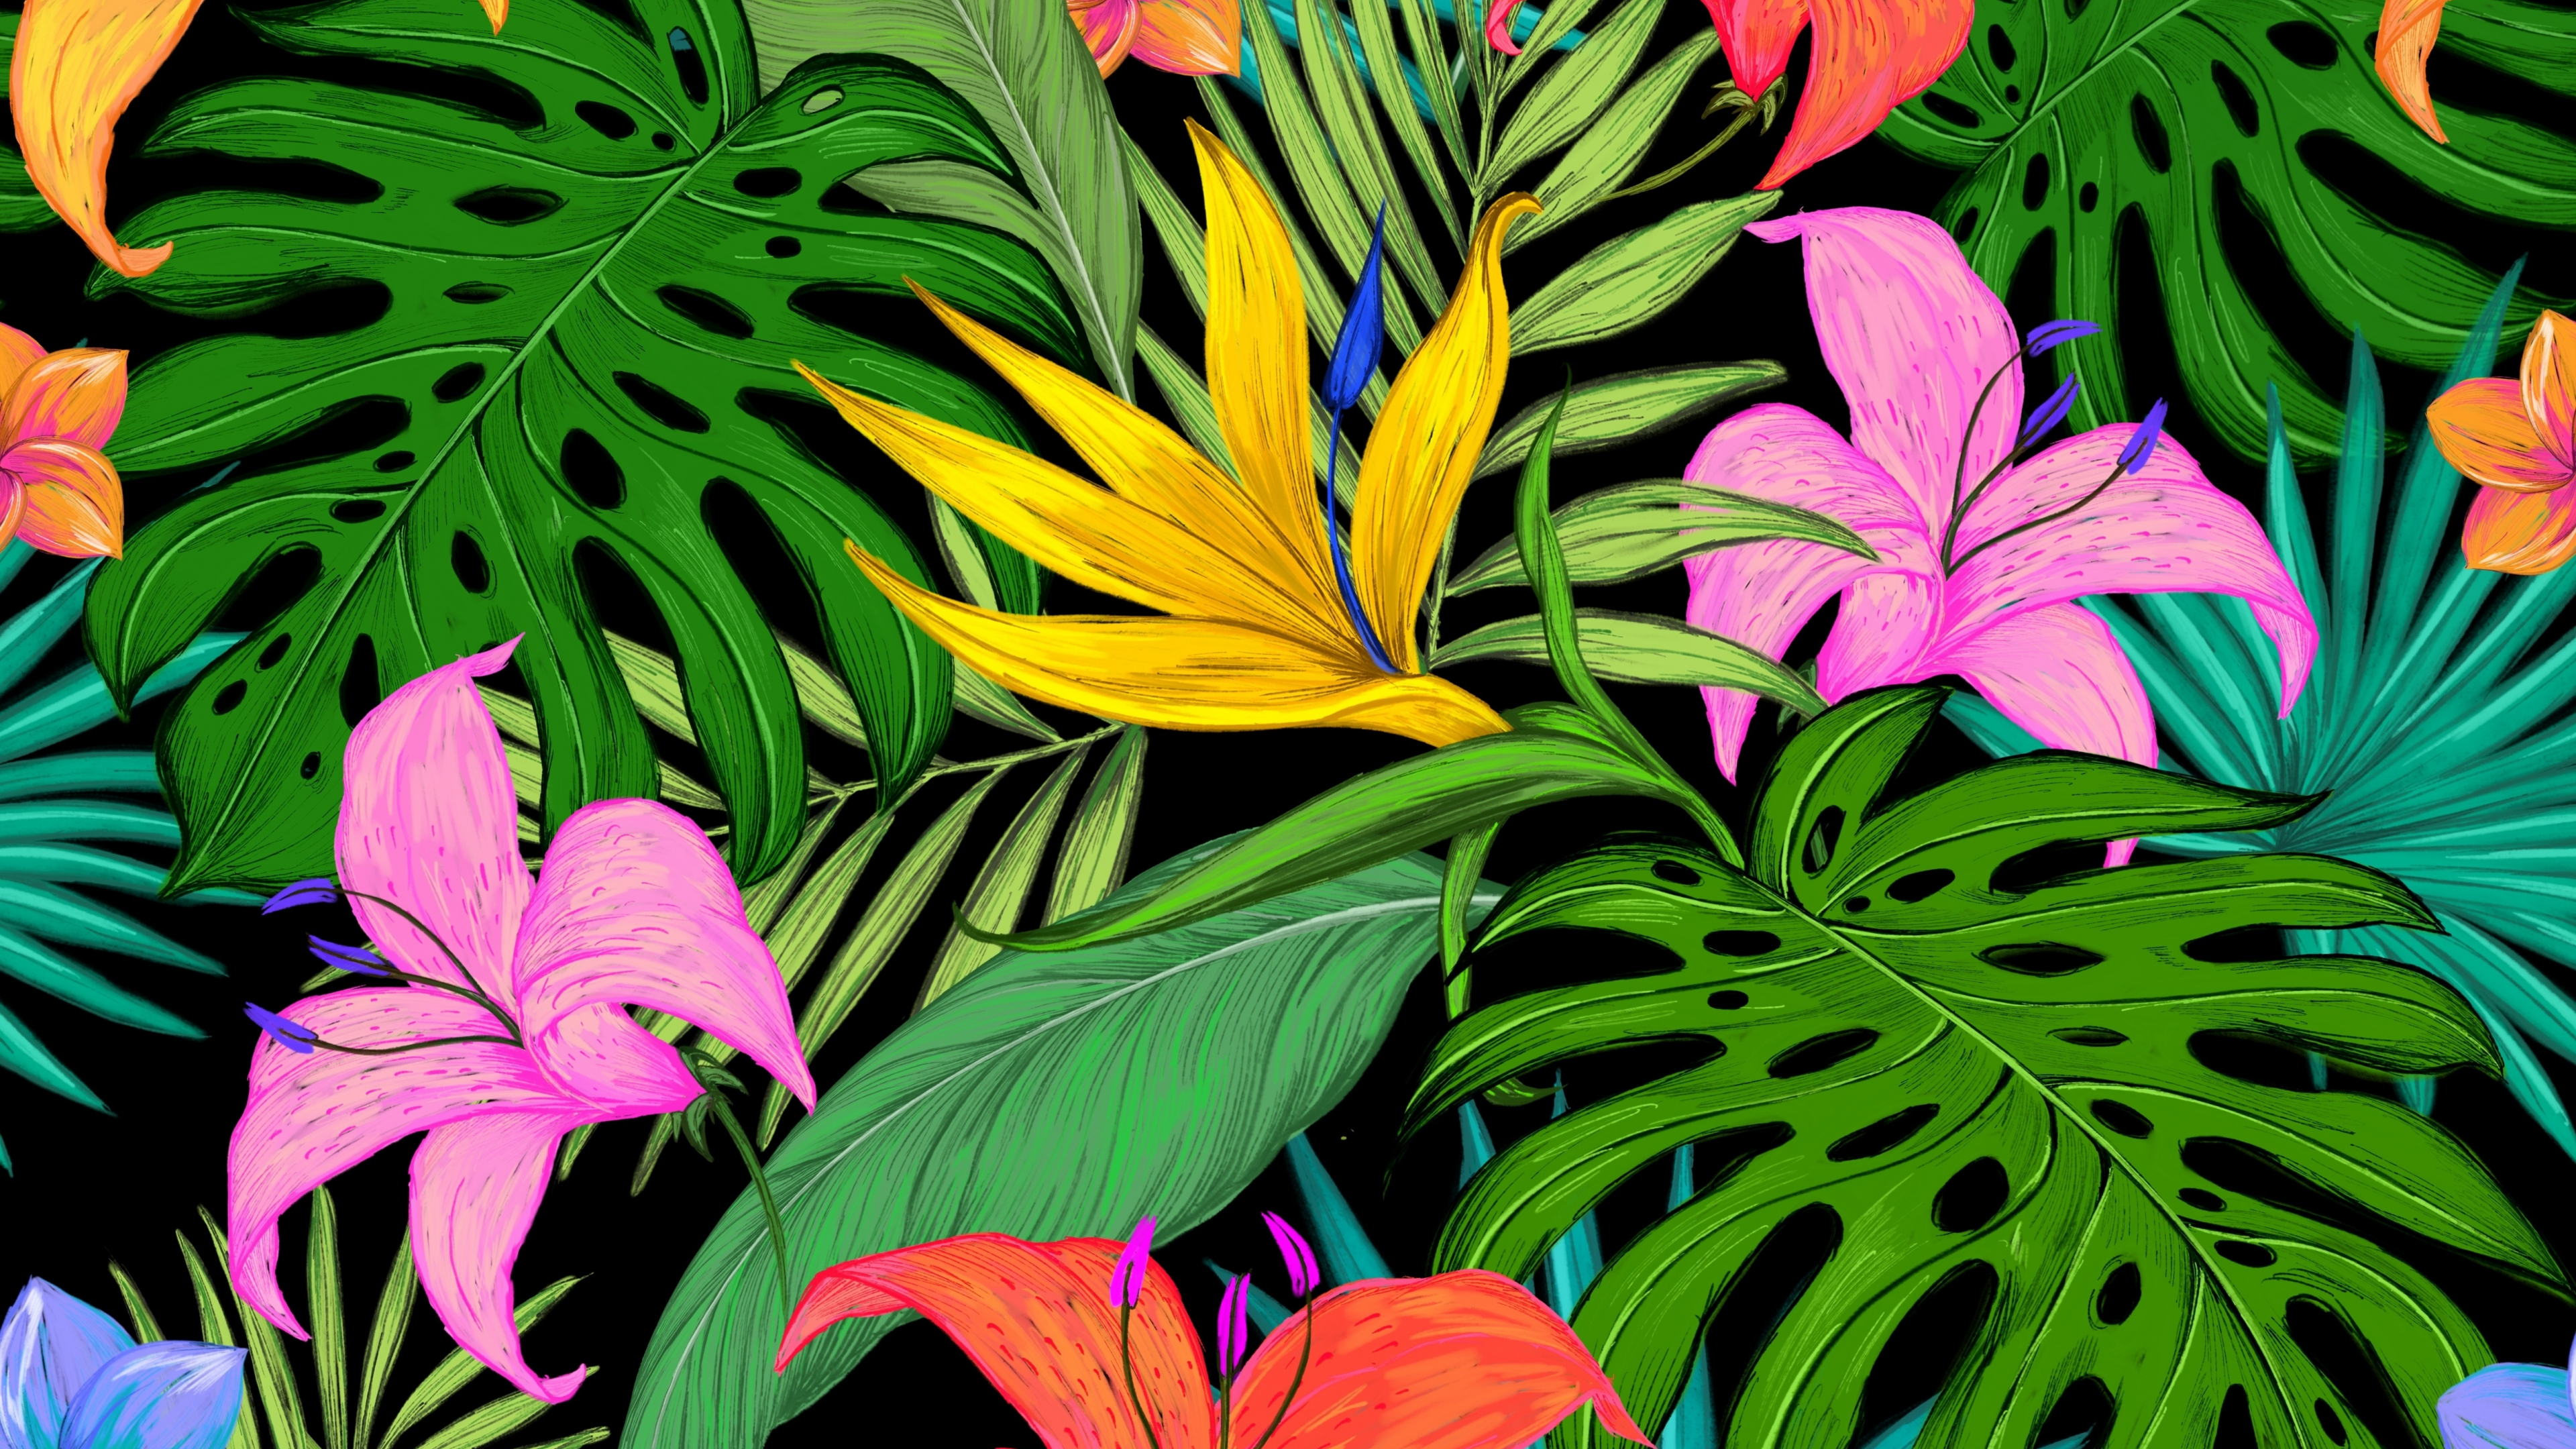 Download wallpaper 3840x2160 pattern, tropical, flowers, leaves 4k wallpaper,  uhd wallpaper, 16:9 widescreen 3840x2160 hd background, 16259